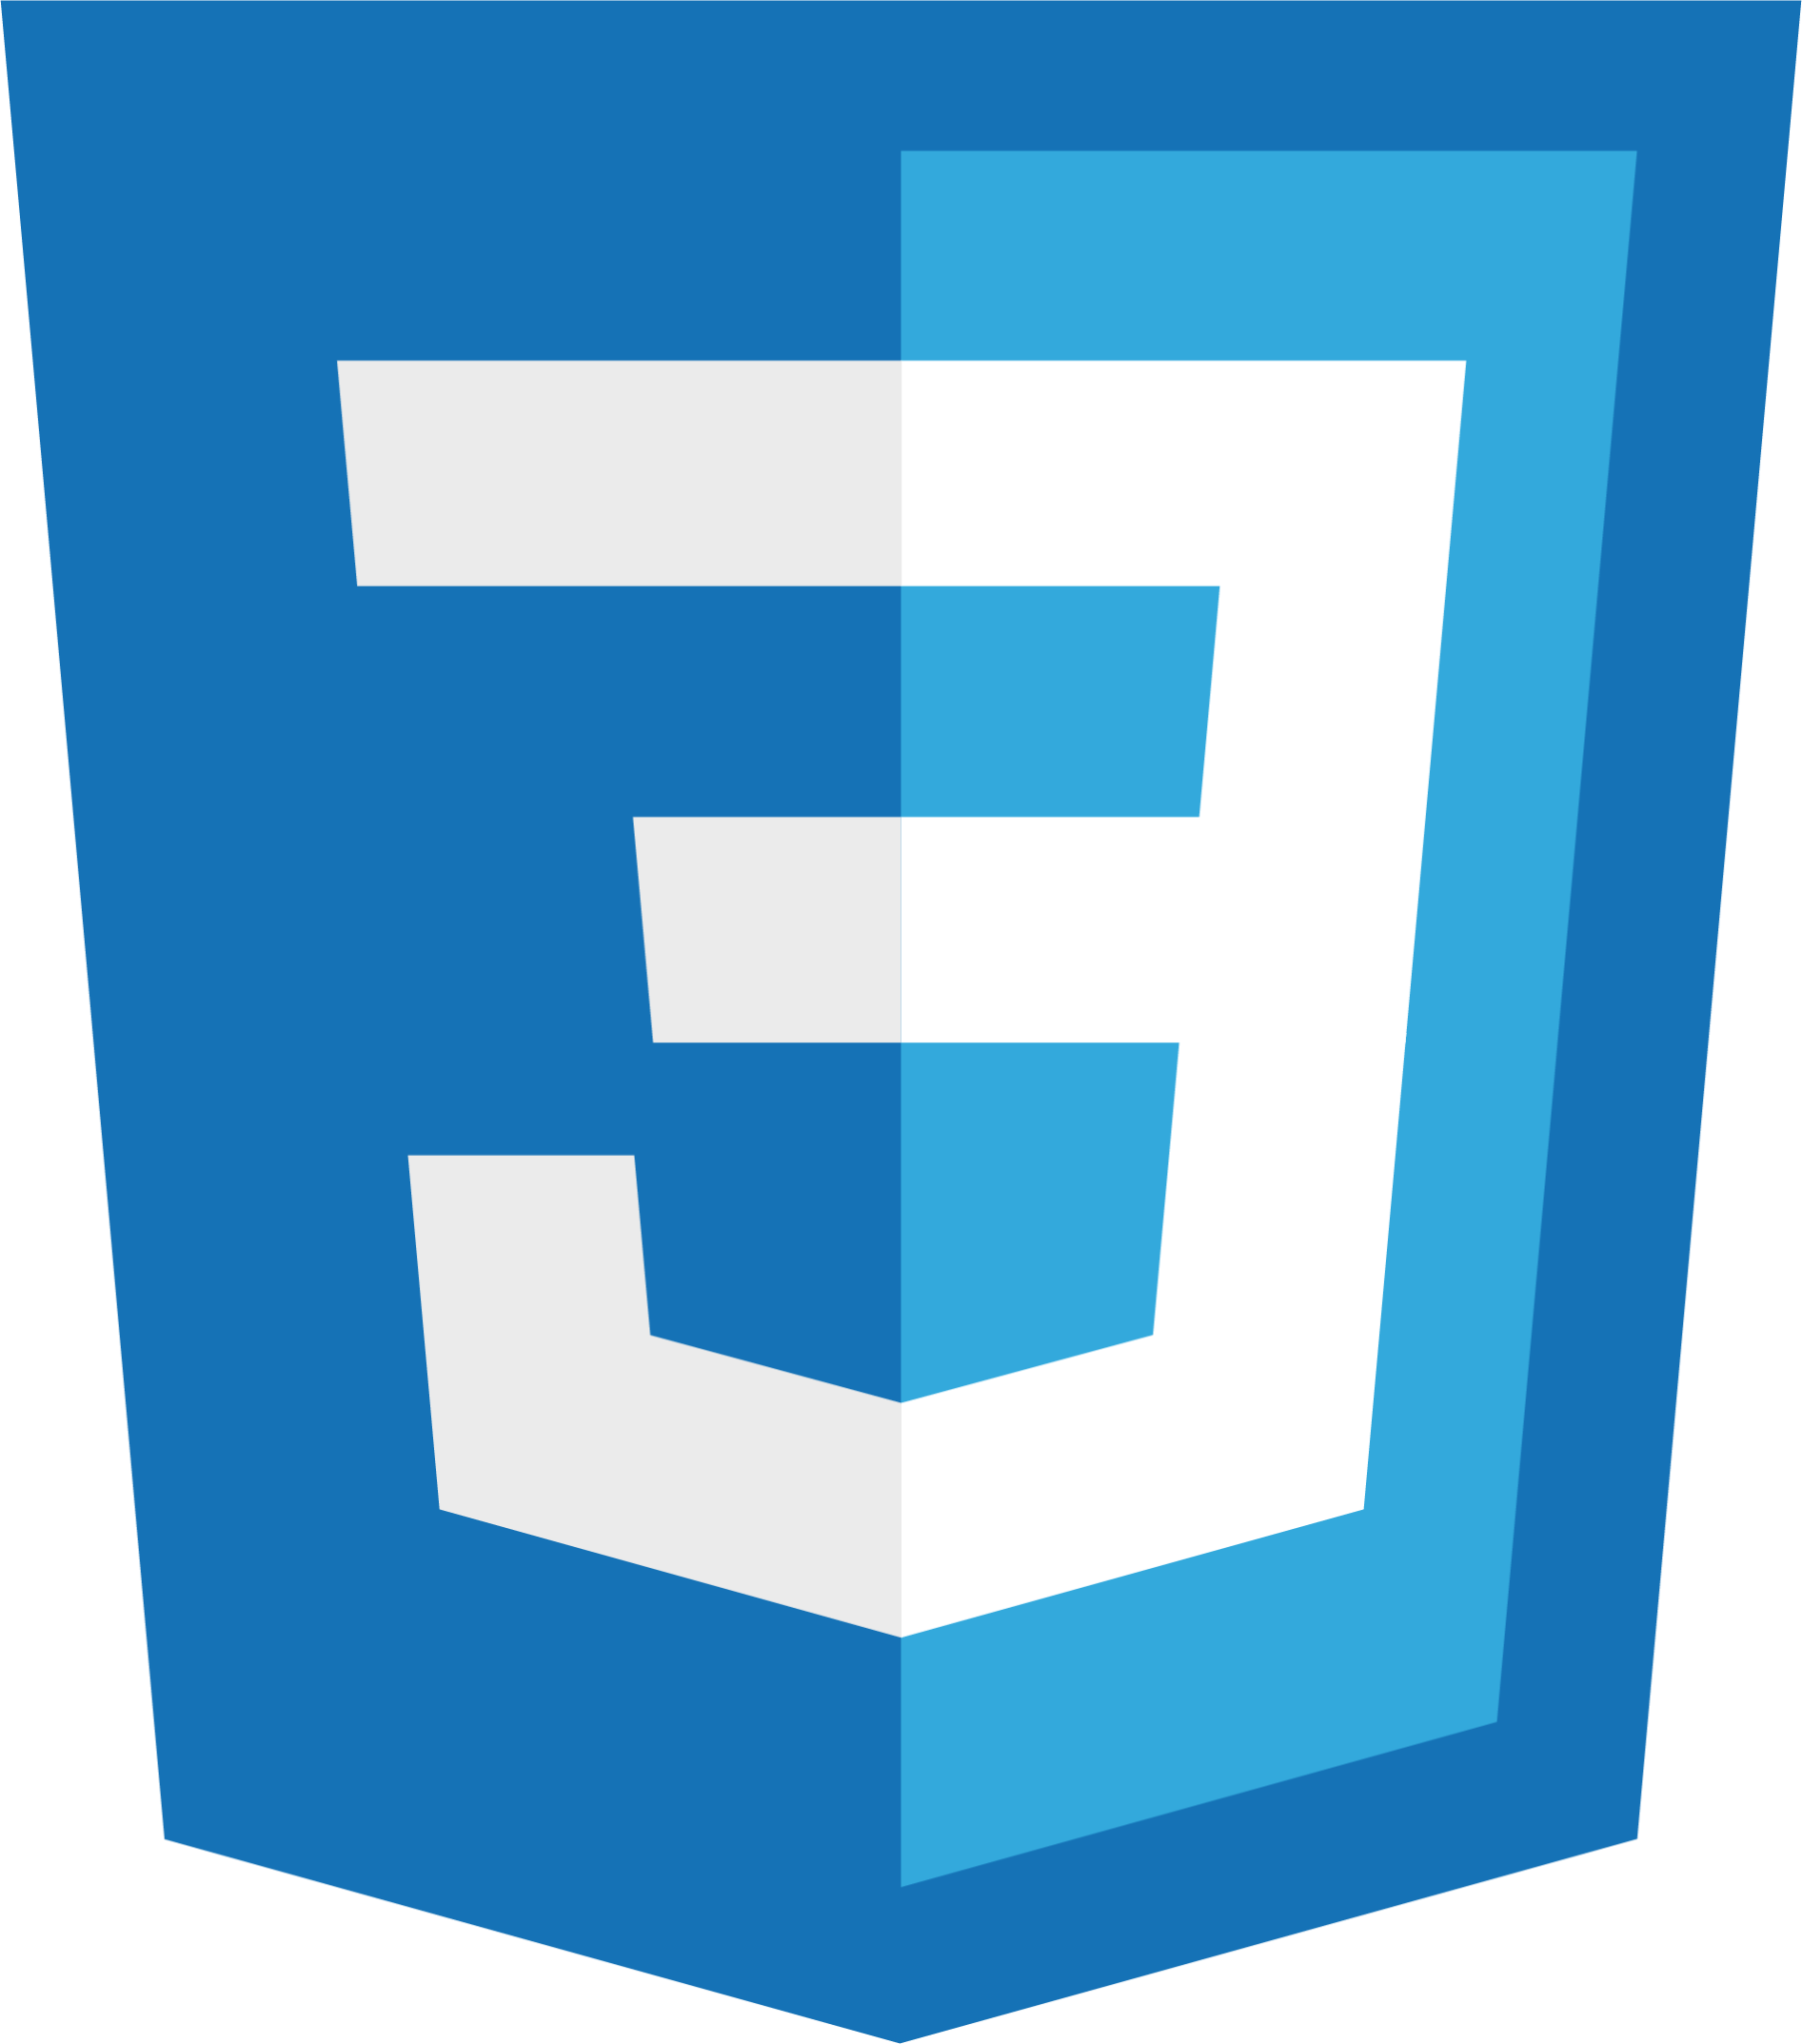 html icon